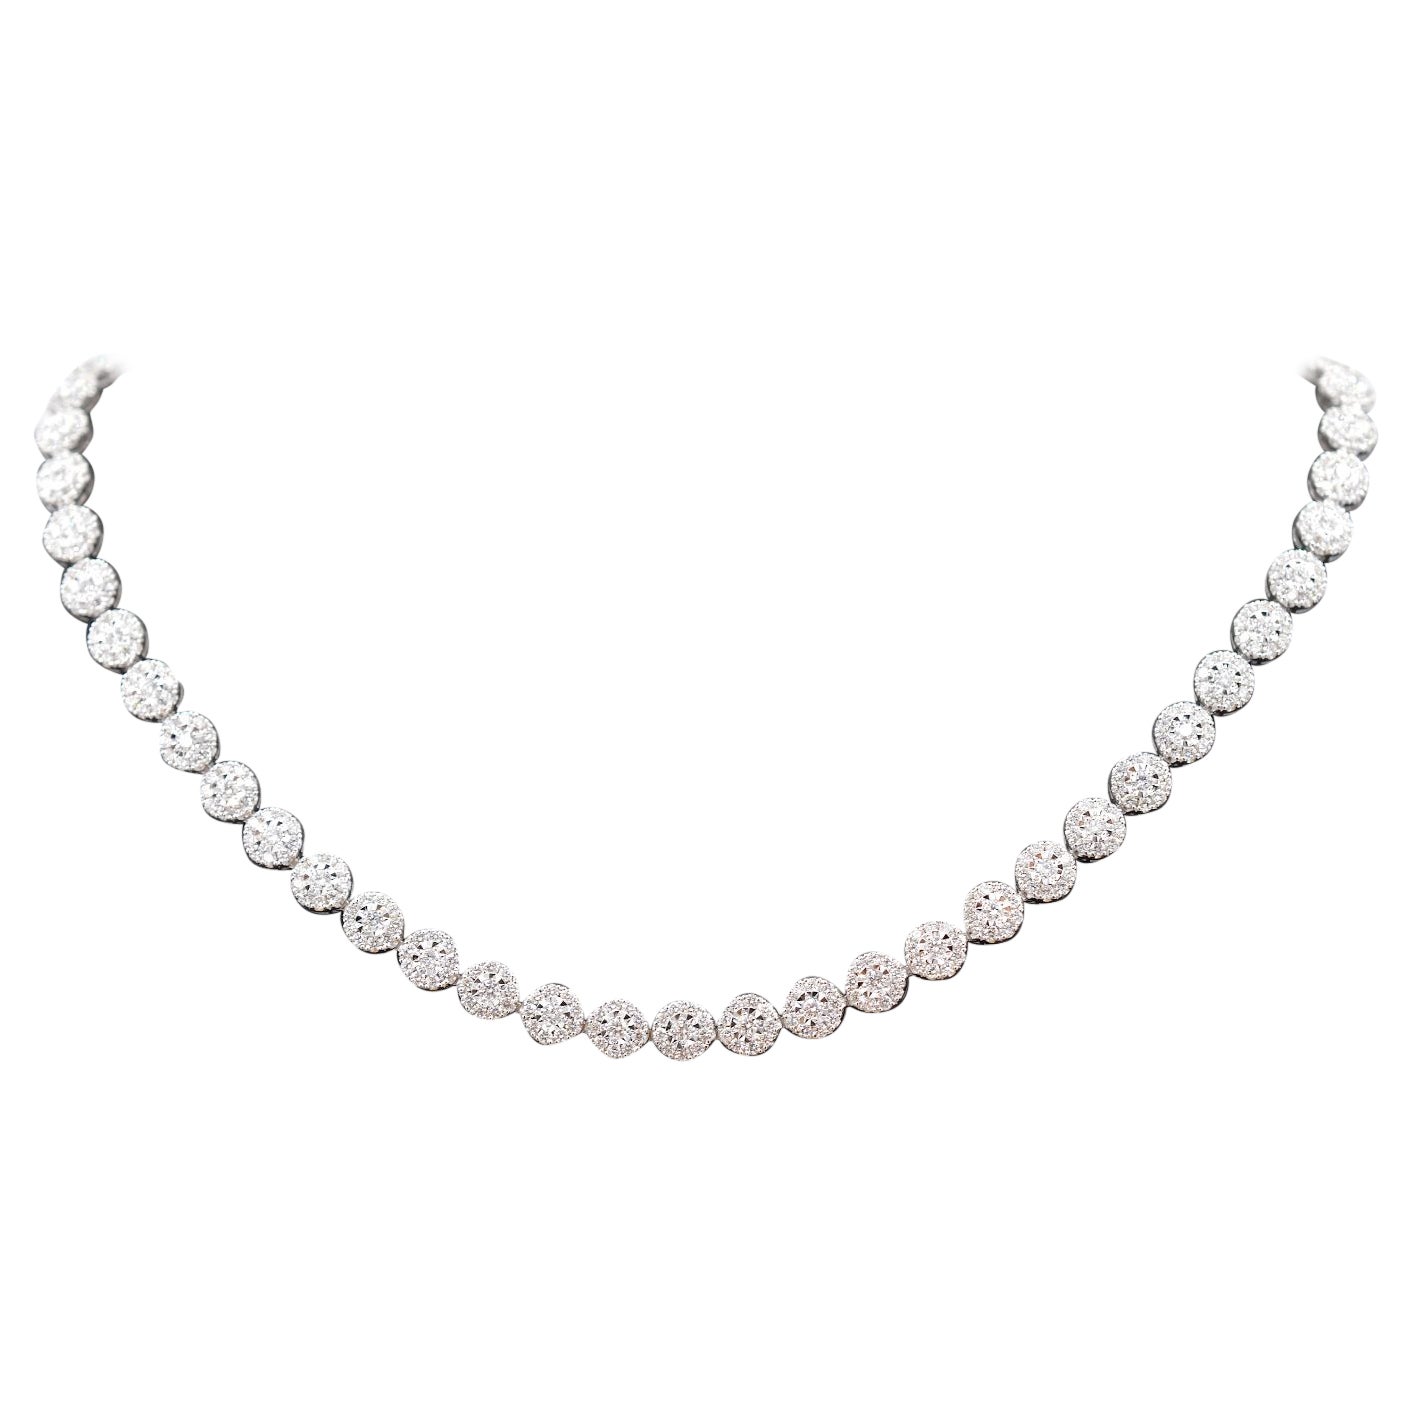 Diamond Necklace Fully Set with 670 Brilliant Cut Diamonds, 8.00 Carat